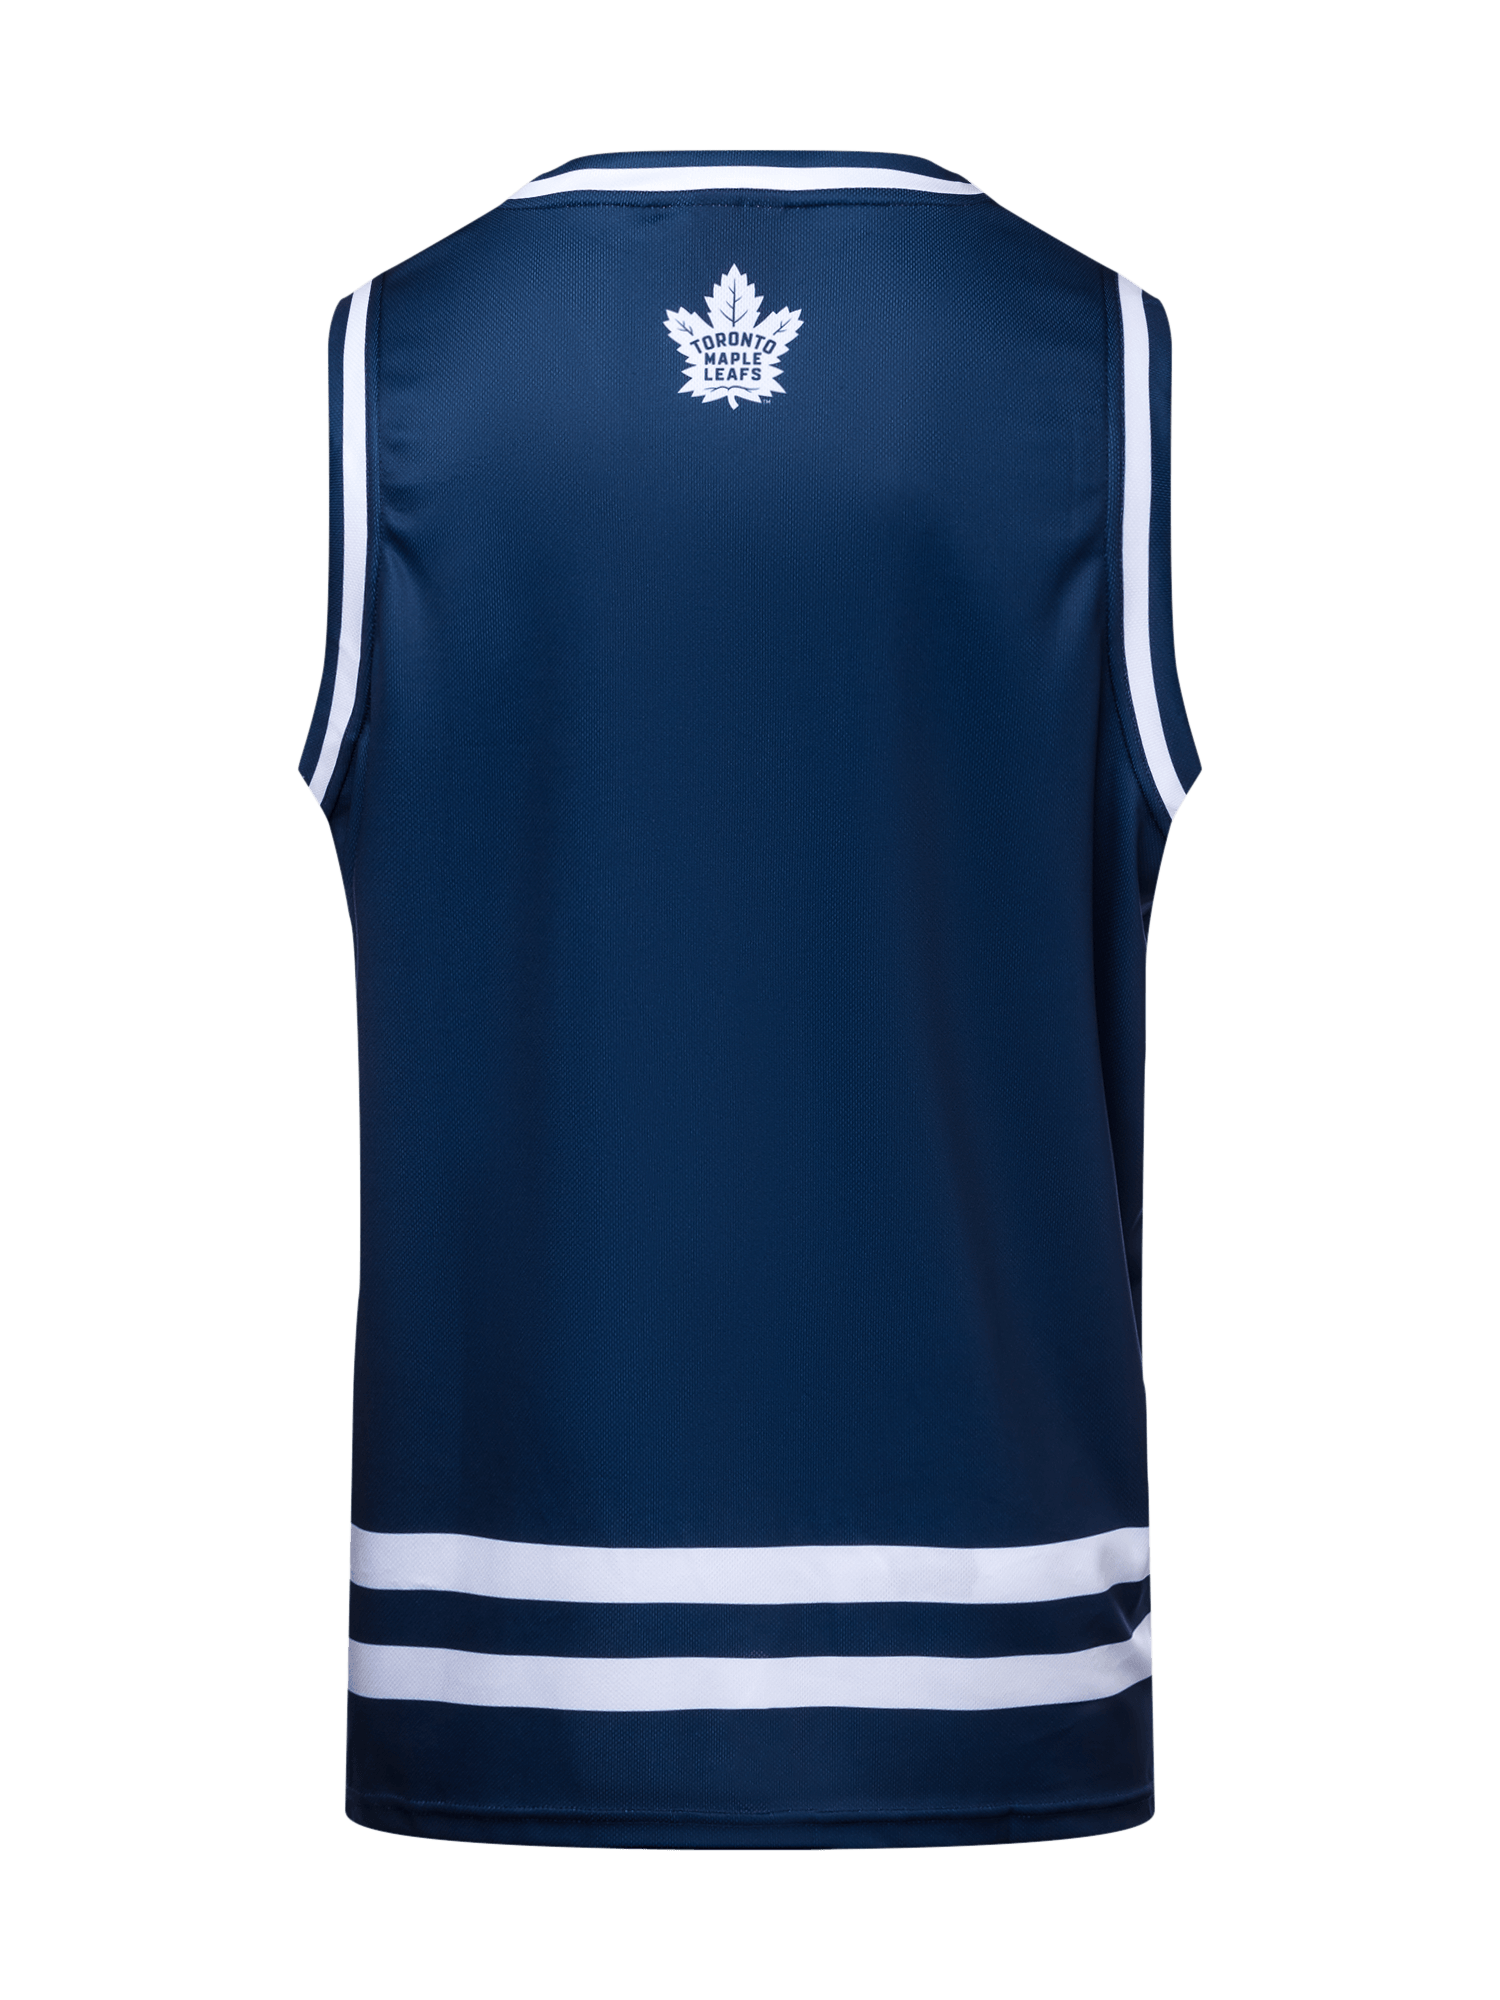 Toronto Maple Leafs NHL Hockey Uniform Joggers for Men